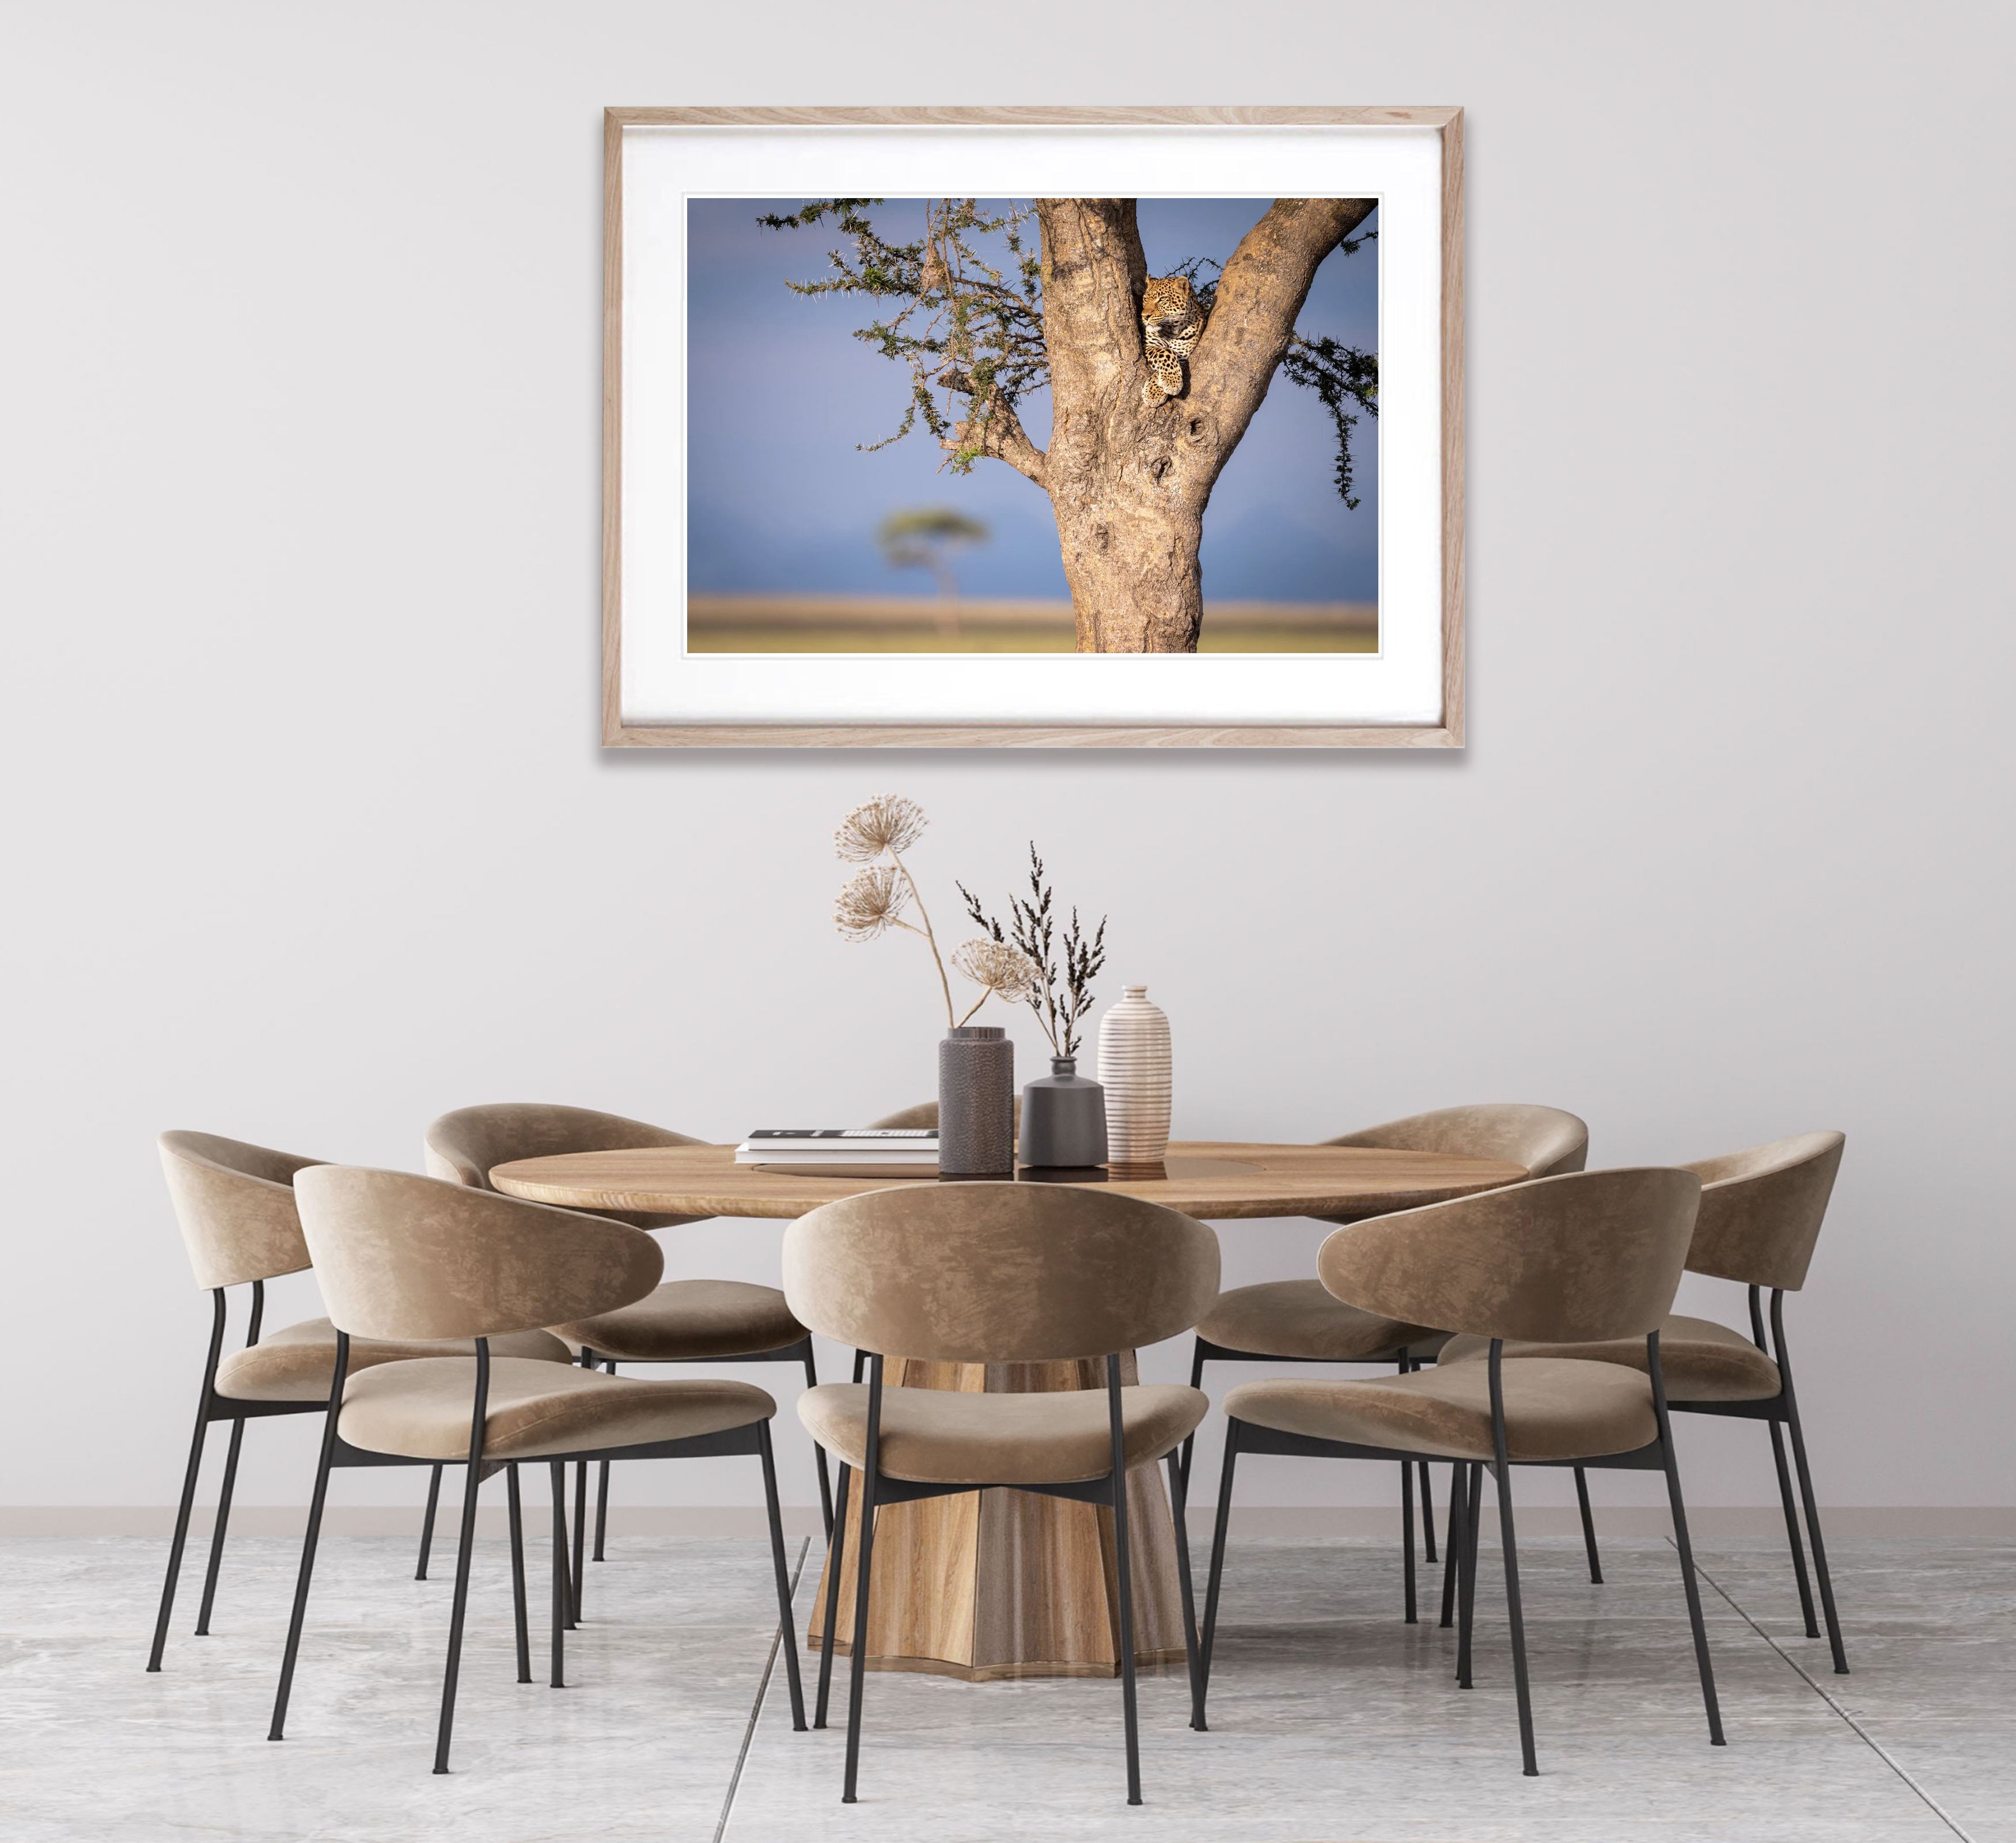 ARTWORK INSTOCK - The Leopard - Canvas Raw Oak Framed print 150x100cms